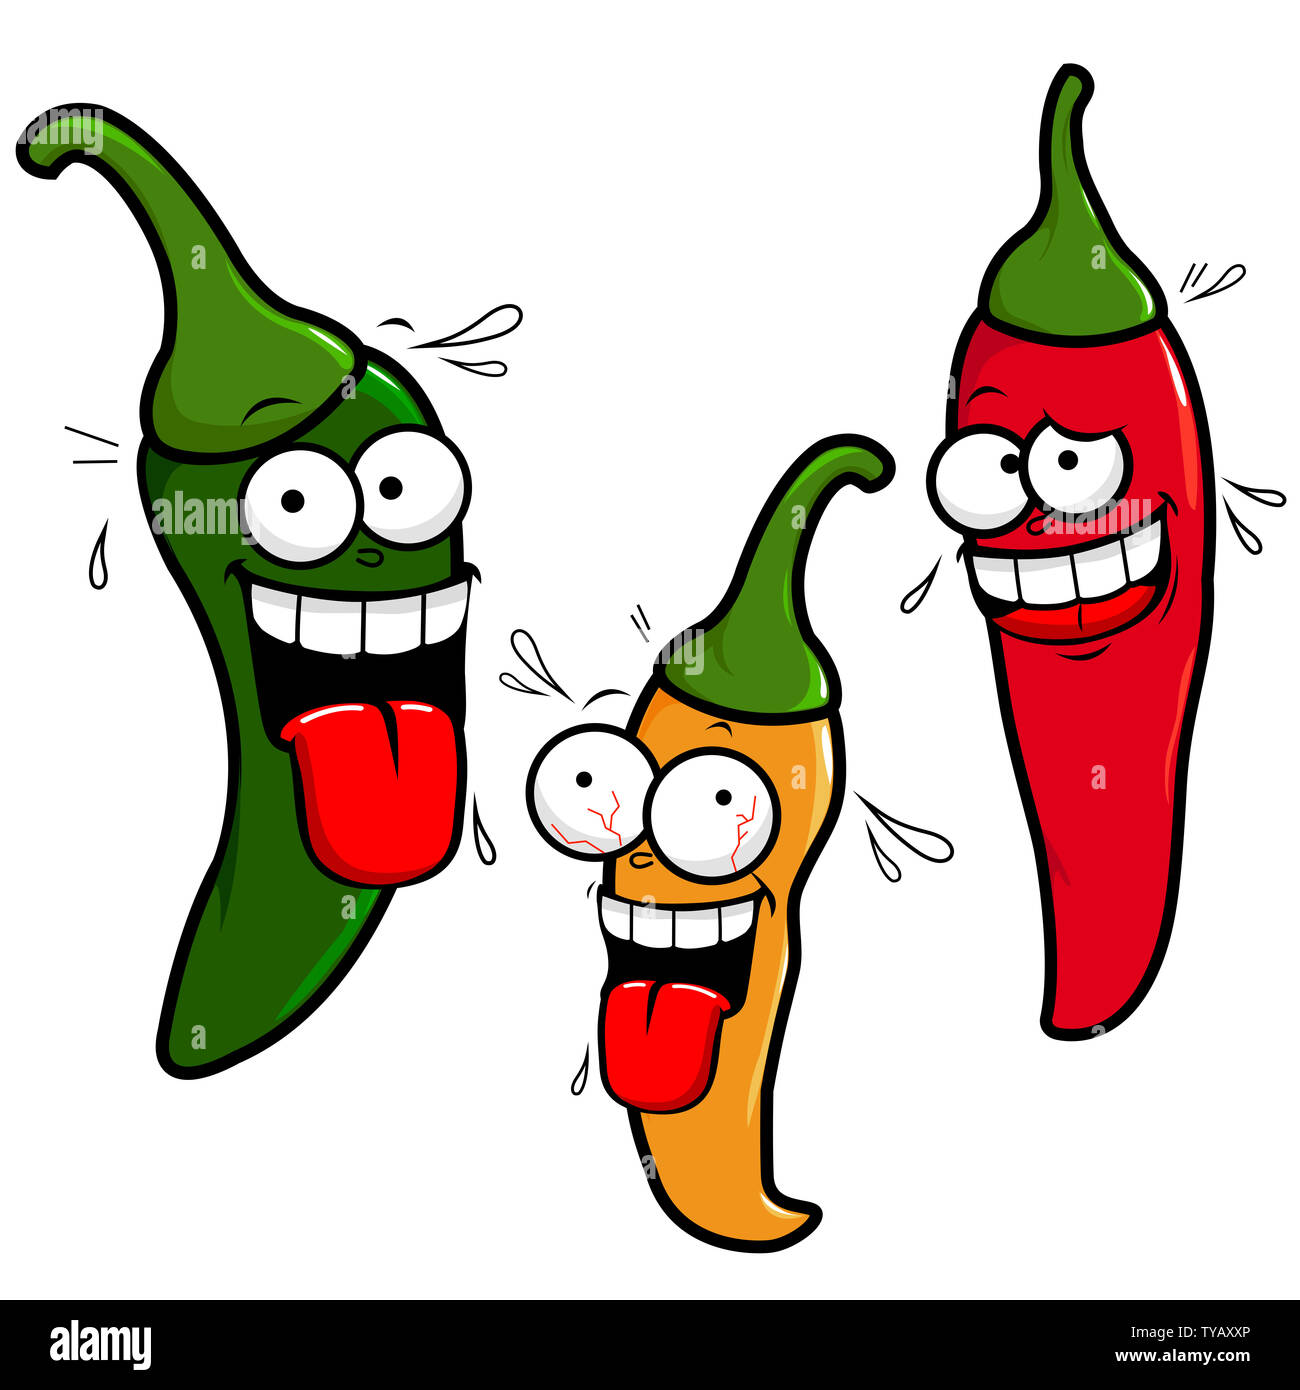 Funny cartoon hot chili pepper characters. Stock Photo